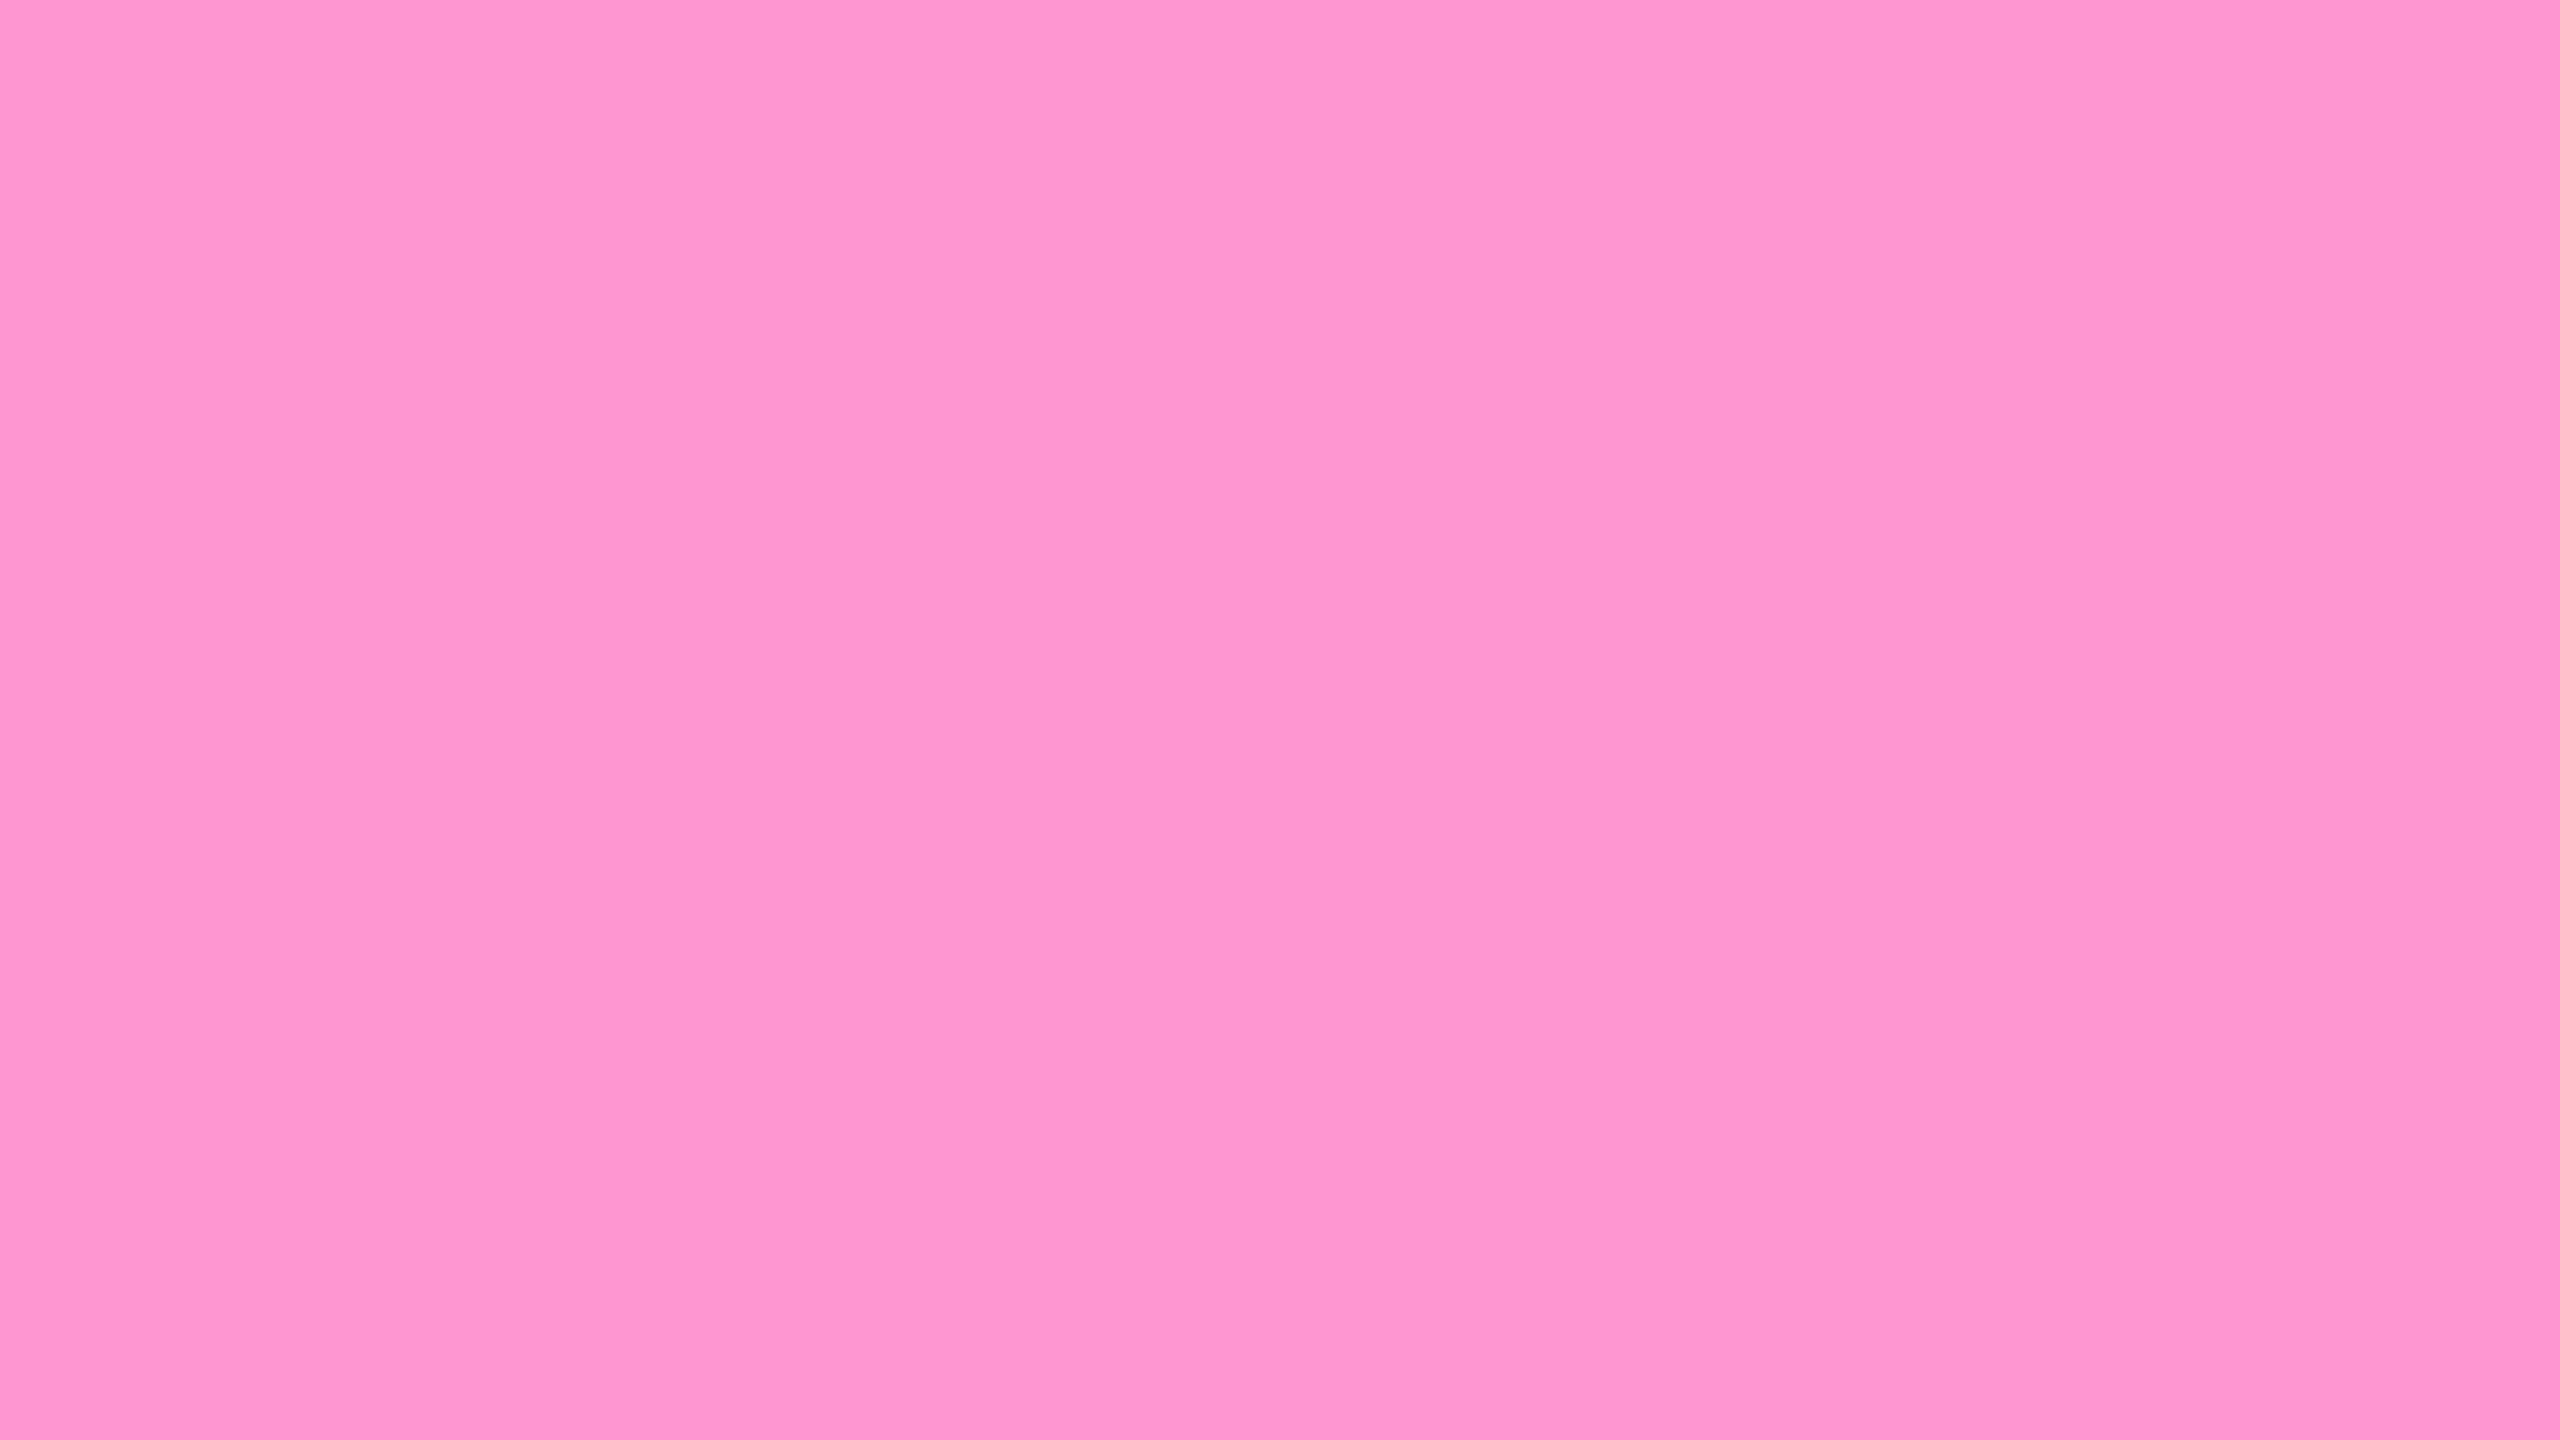 Kết quả hình ảnh cho nền hồng phấn  Pink wallpaper mobile Pink wallpaper  iphone Pink plain wallpaper